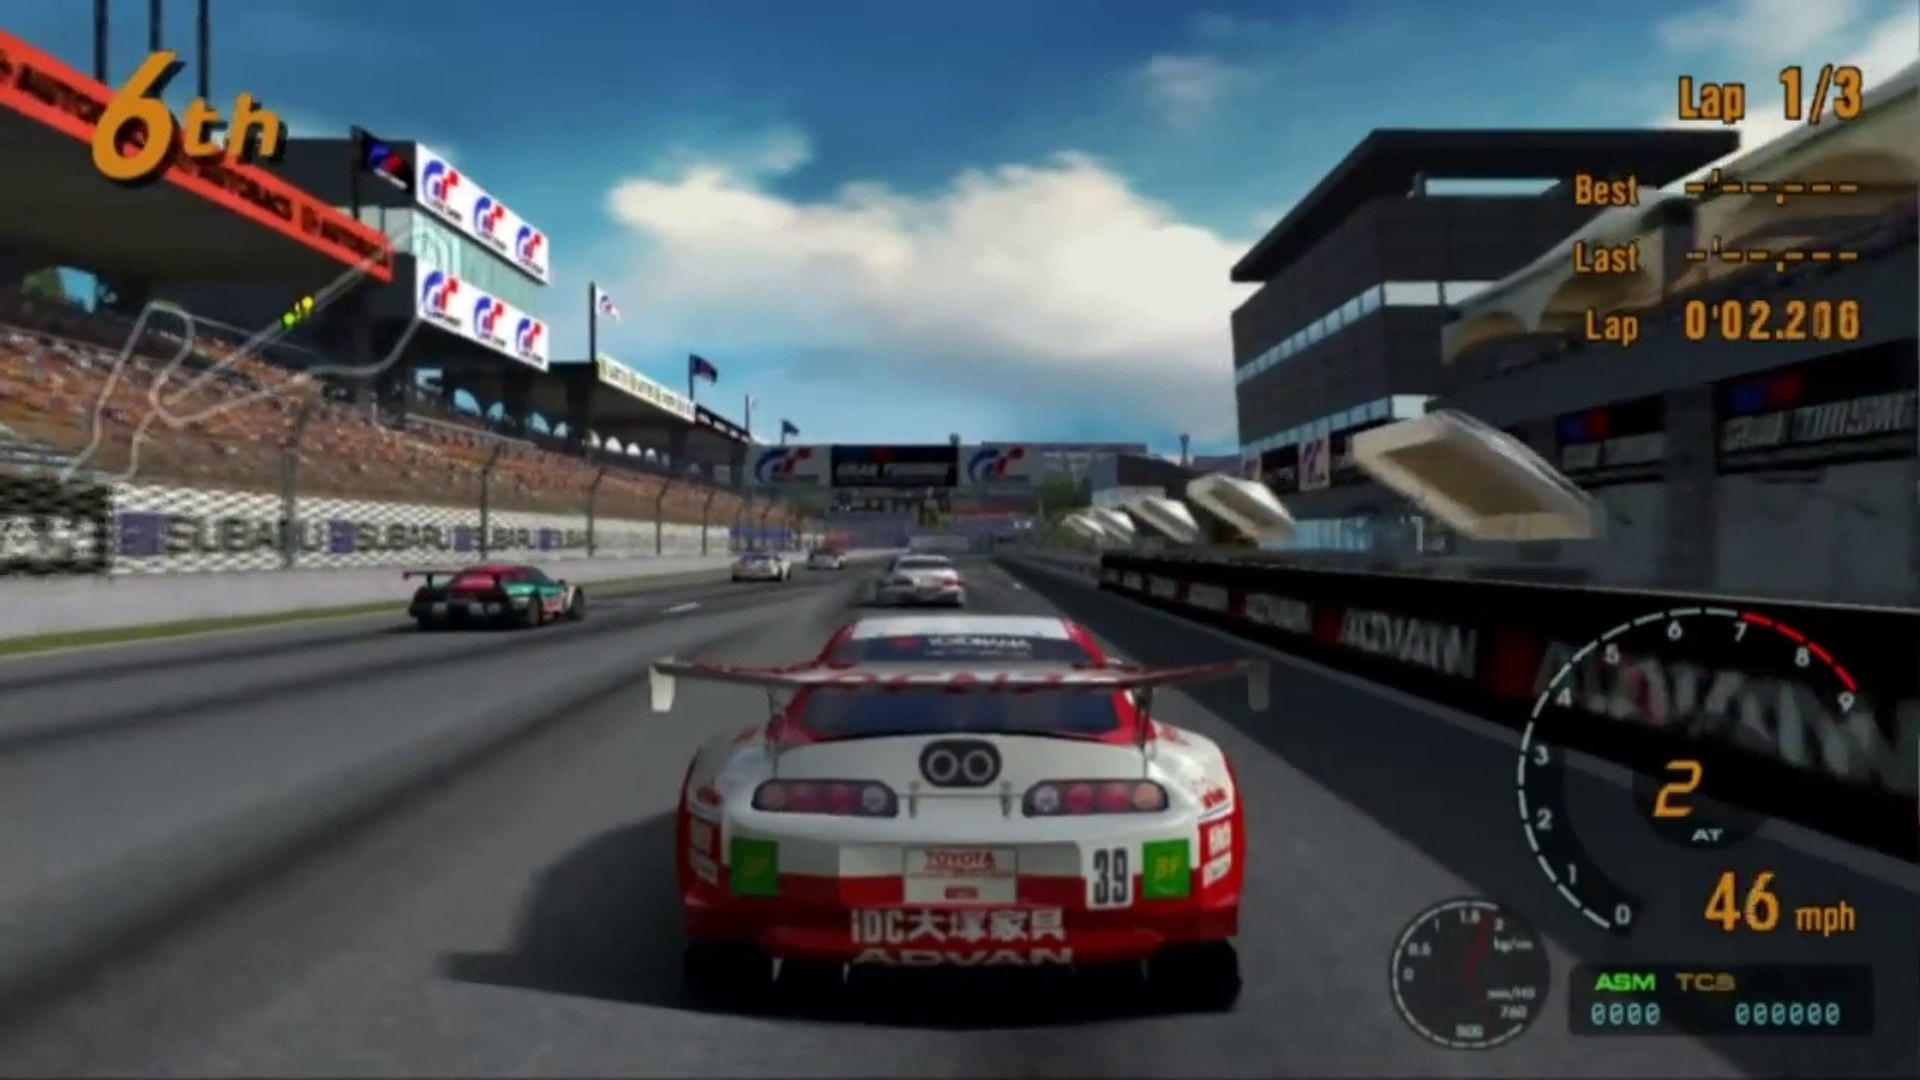 Gran Turismo 3 HD on PCSX2 Emulator (16:9 - 2x Native Res) - video  Dailymotion